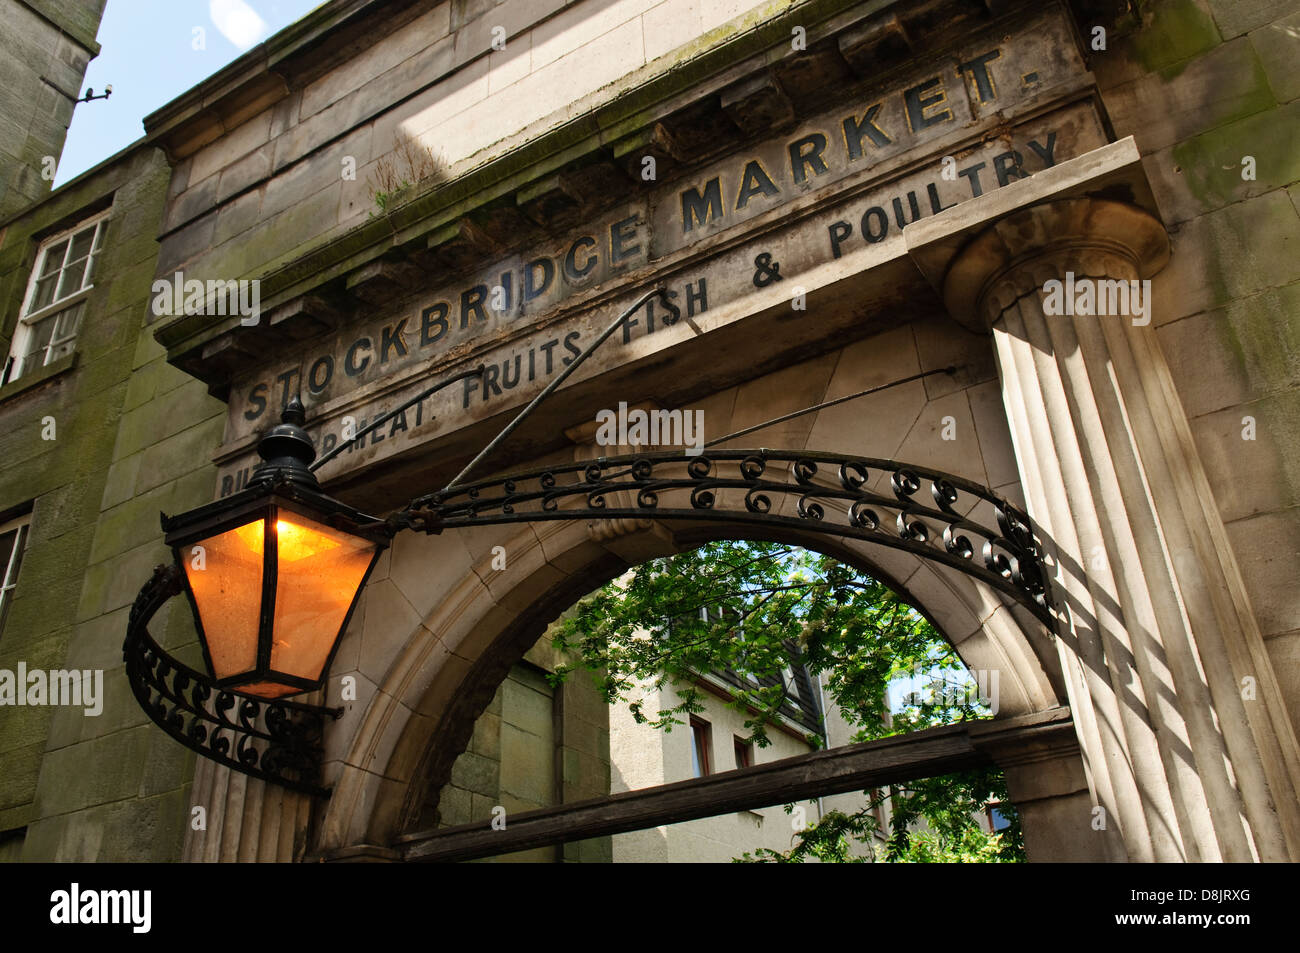 The Entrance to Stockbridge Market, Edinburgh, Scotland, UK Stock Photo